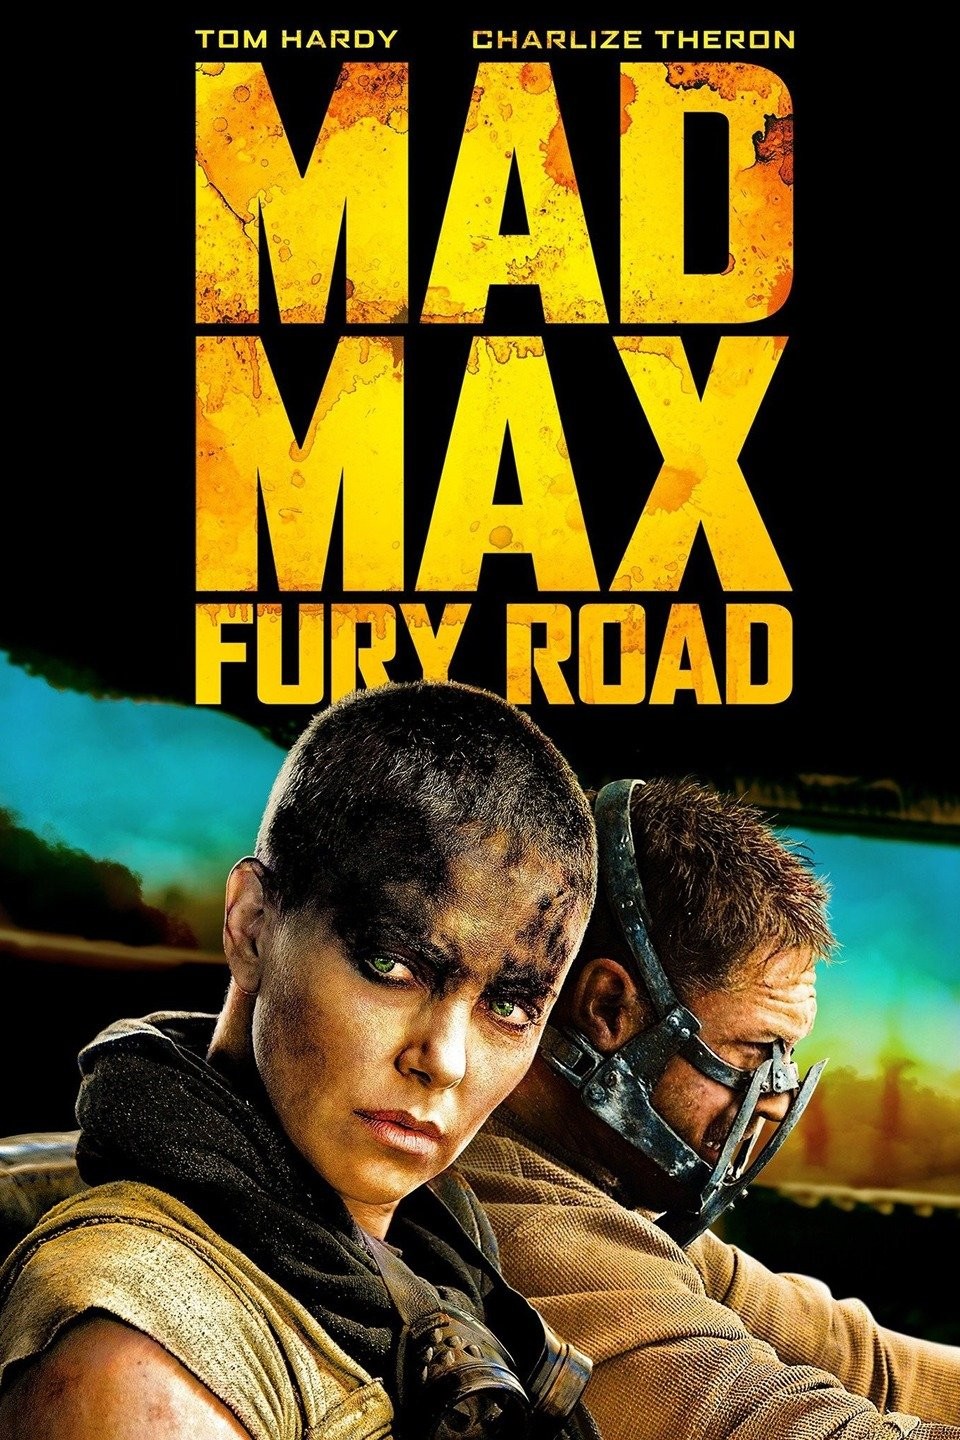 Mad Max 2 - Announcement Trailer